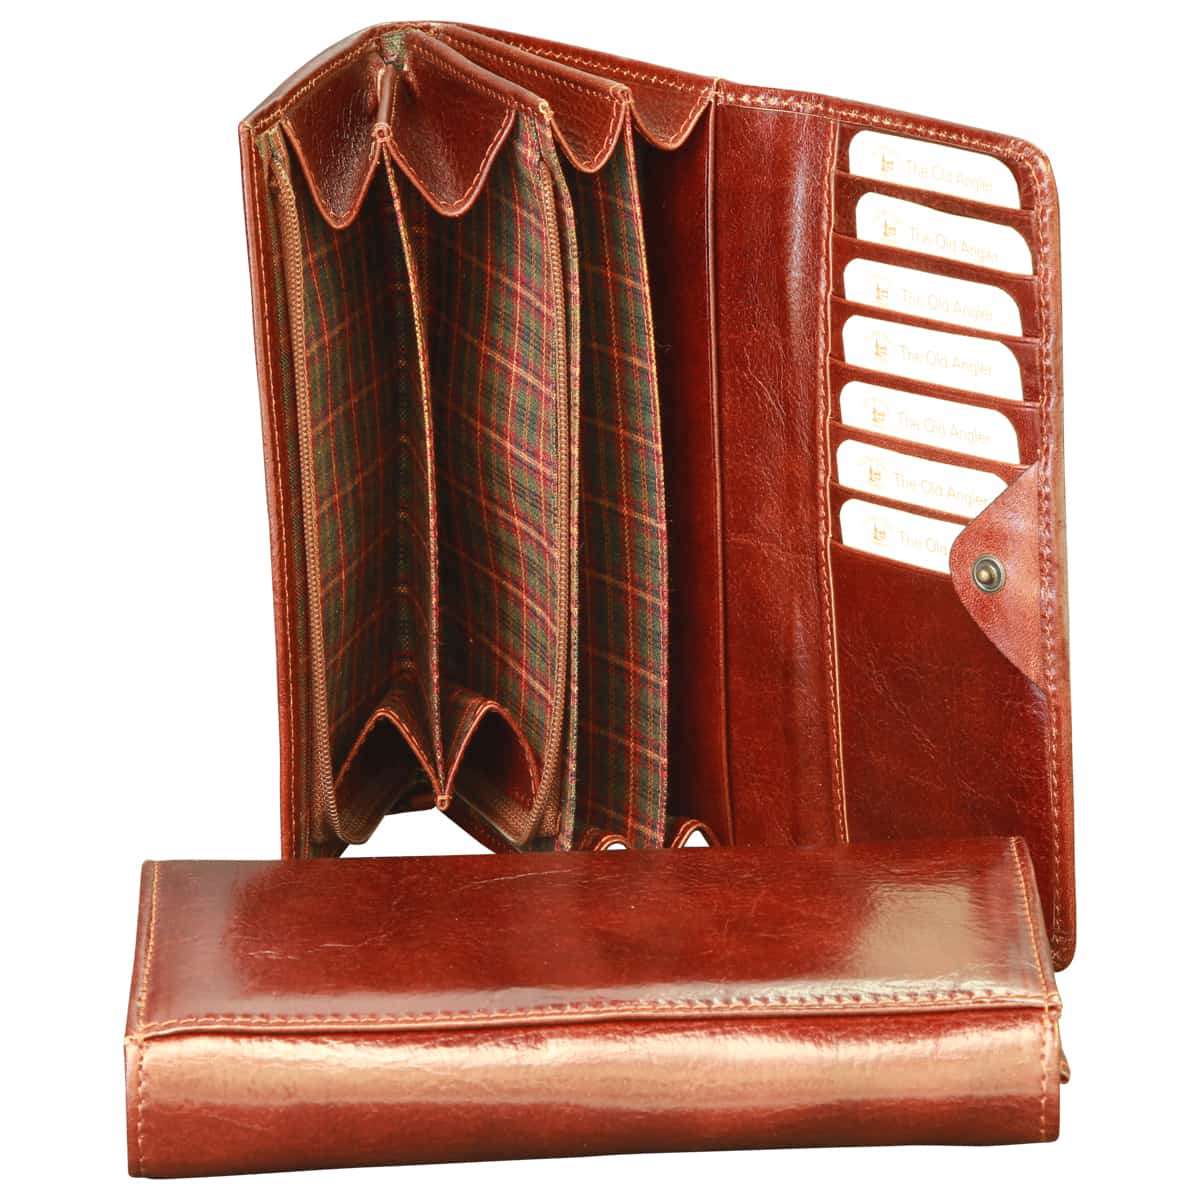 Vachetta leather wallet for women - Brown | 801605MA UK | Old Angler Firenze